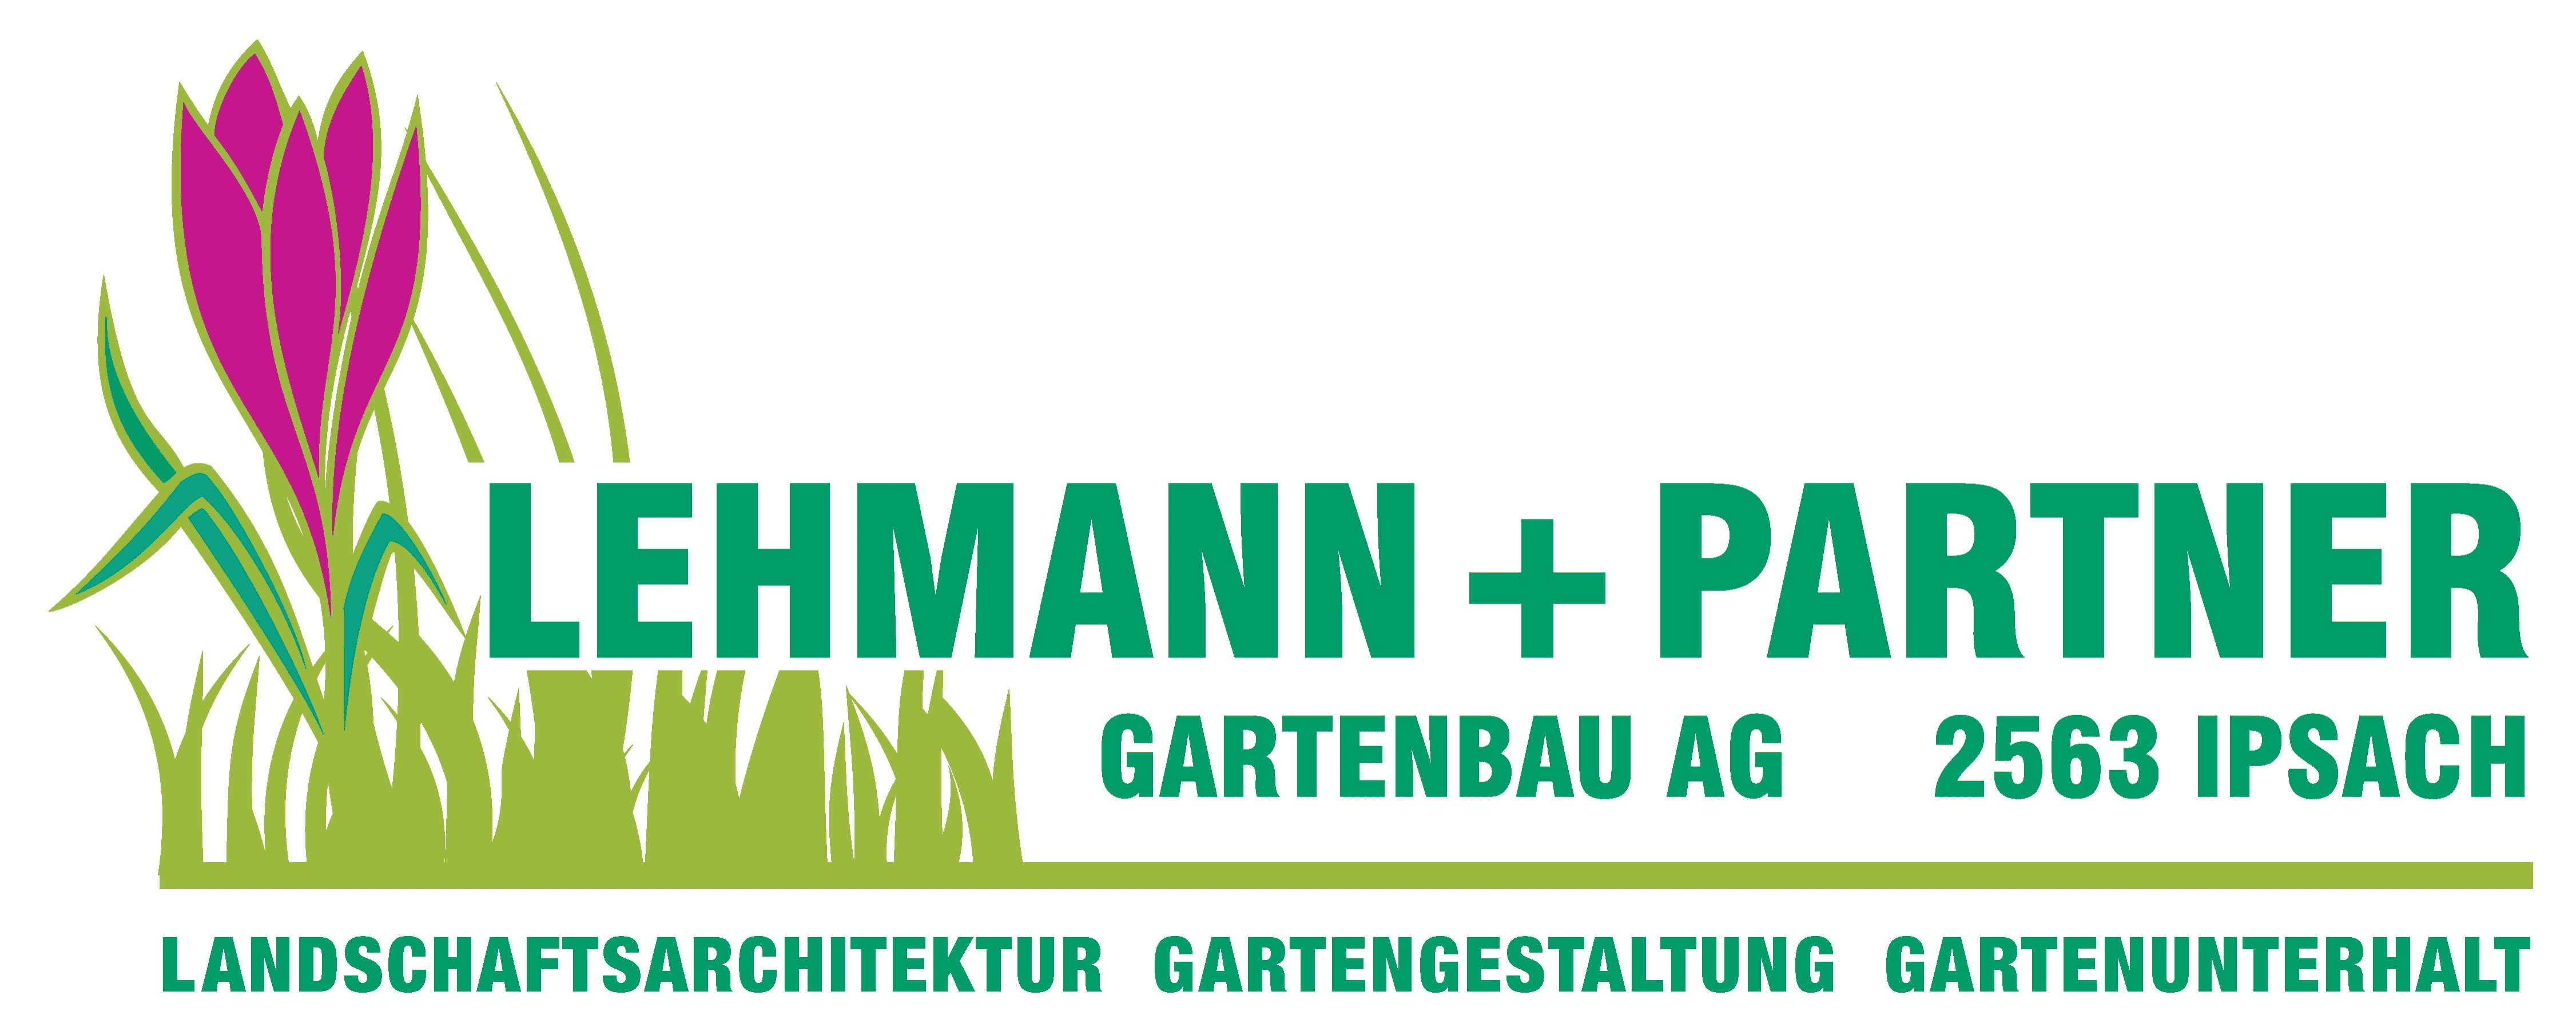 Lehmann + Partner Gartenbau AG